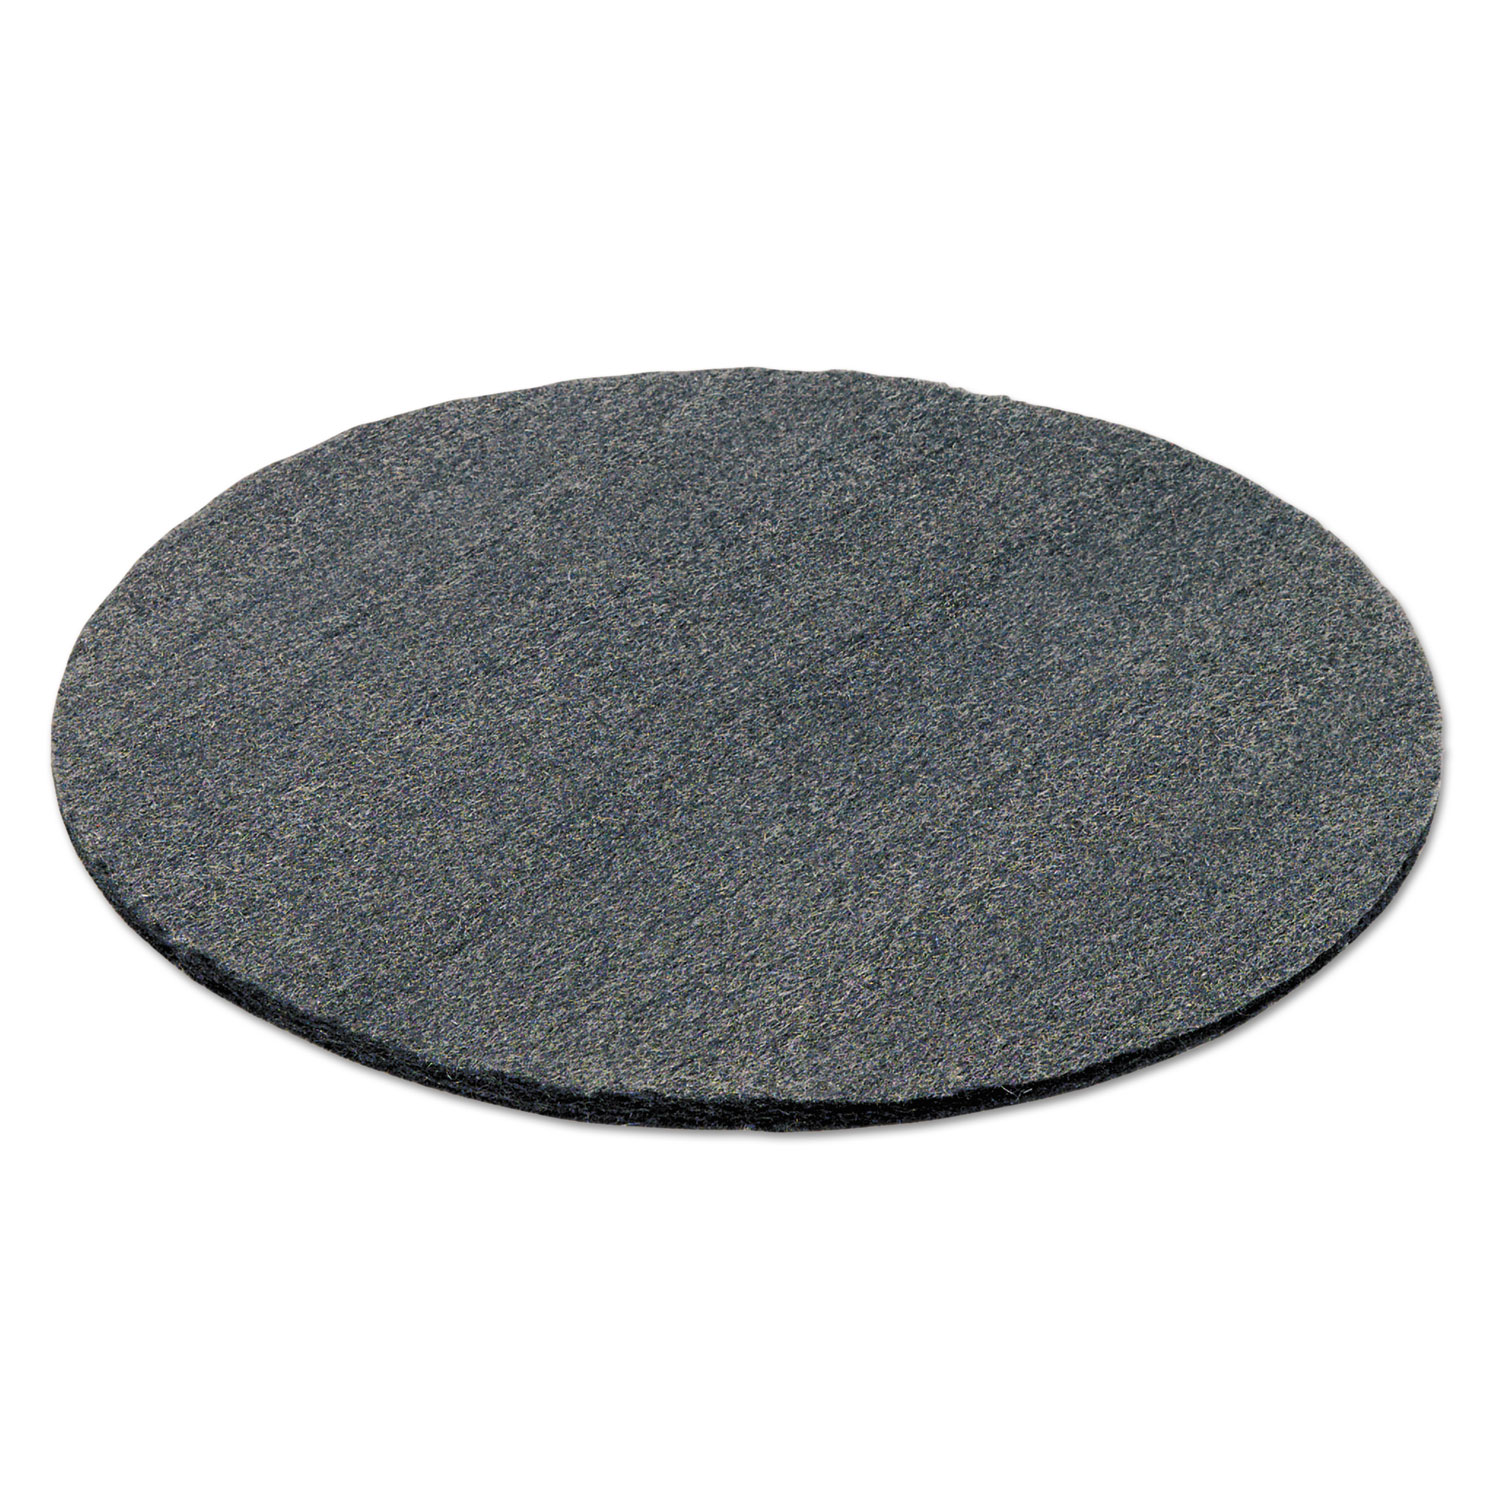 Radial Steel Wool Pads, Grade 0 (fine): Cleaning & Polishing, 19, Gray, 12/CT